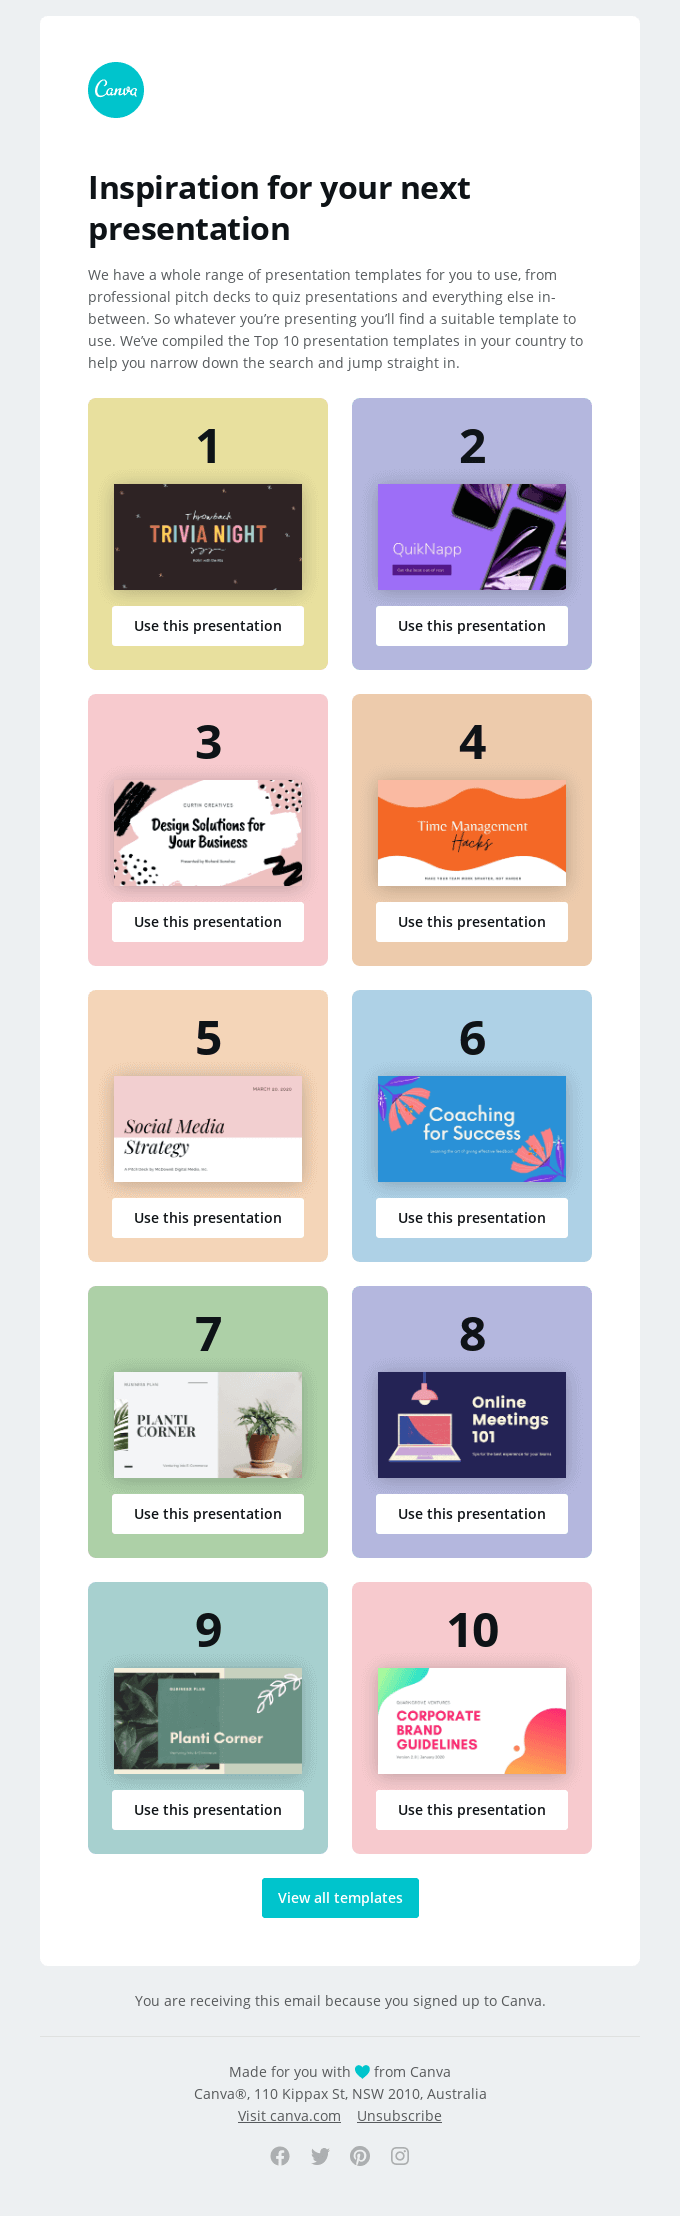 Discover US' Top 10 Presentation templates